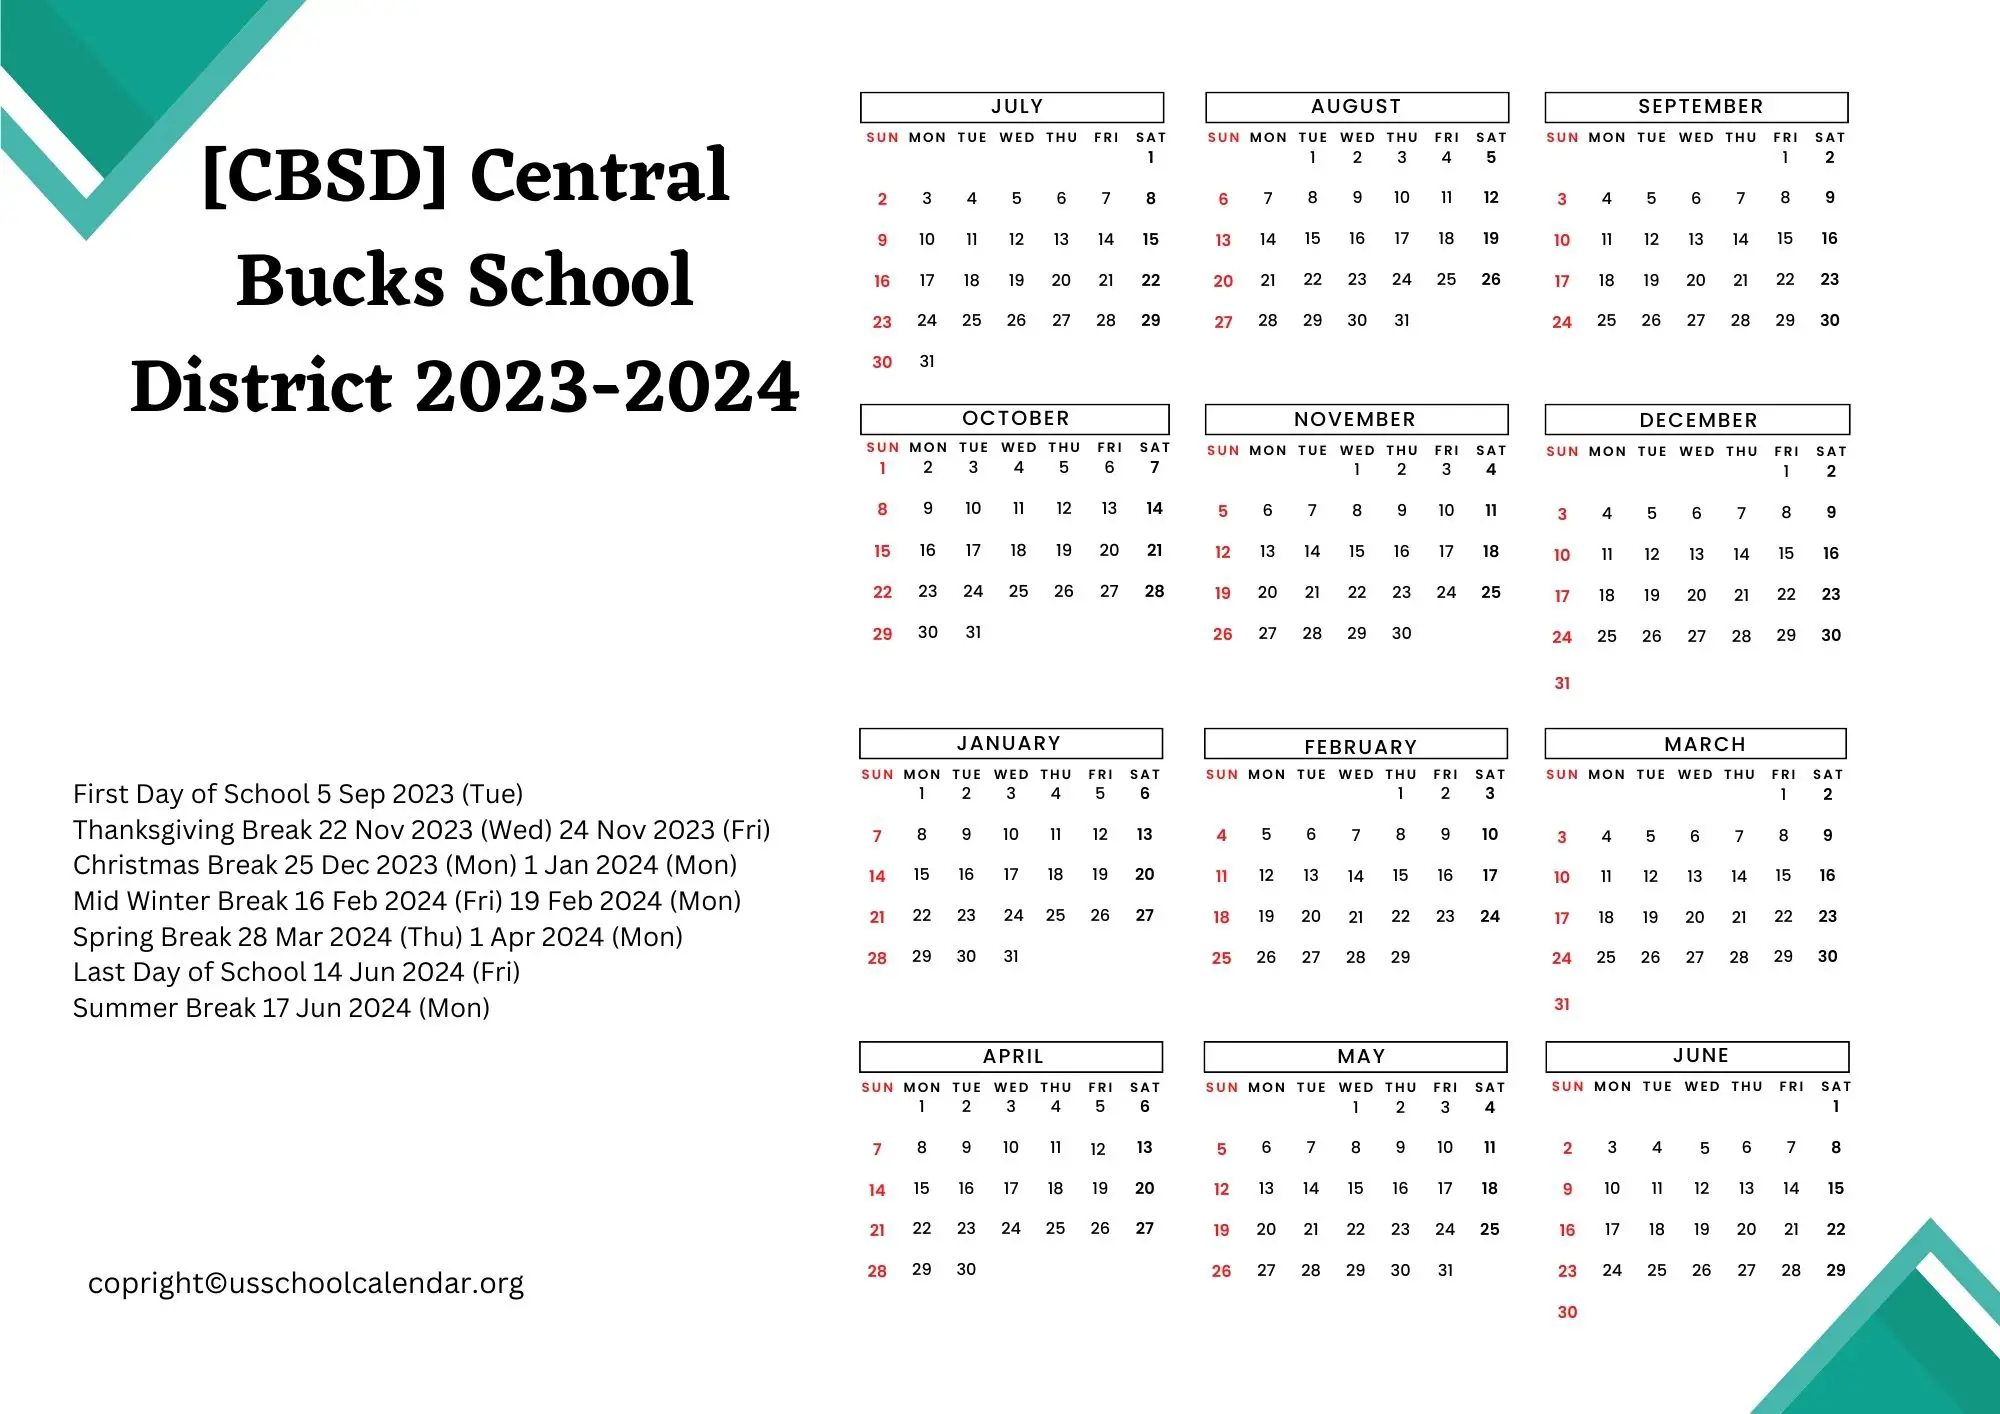 cbsd-central-bucks-school-district-calendar-holidays-2023-2024